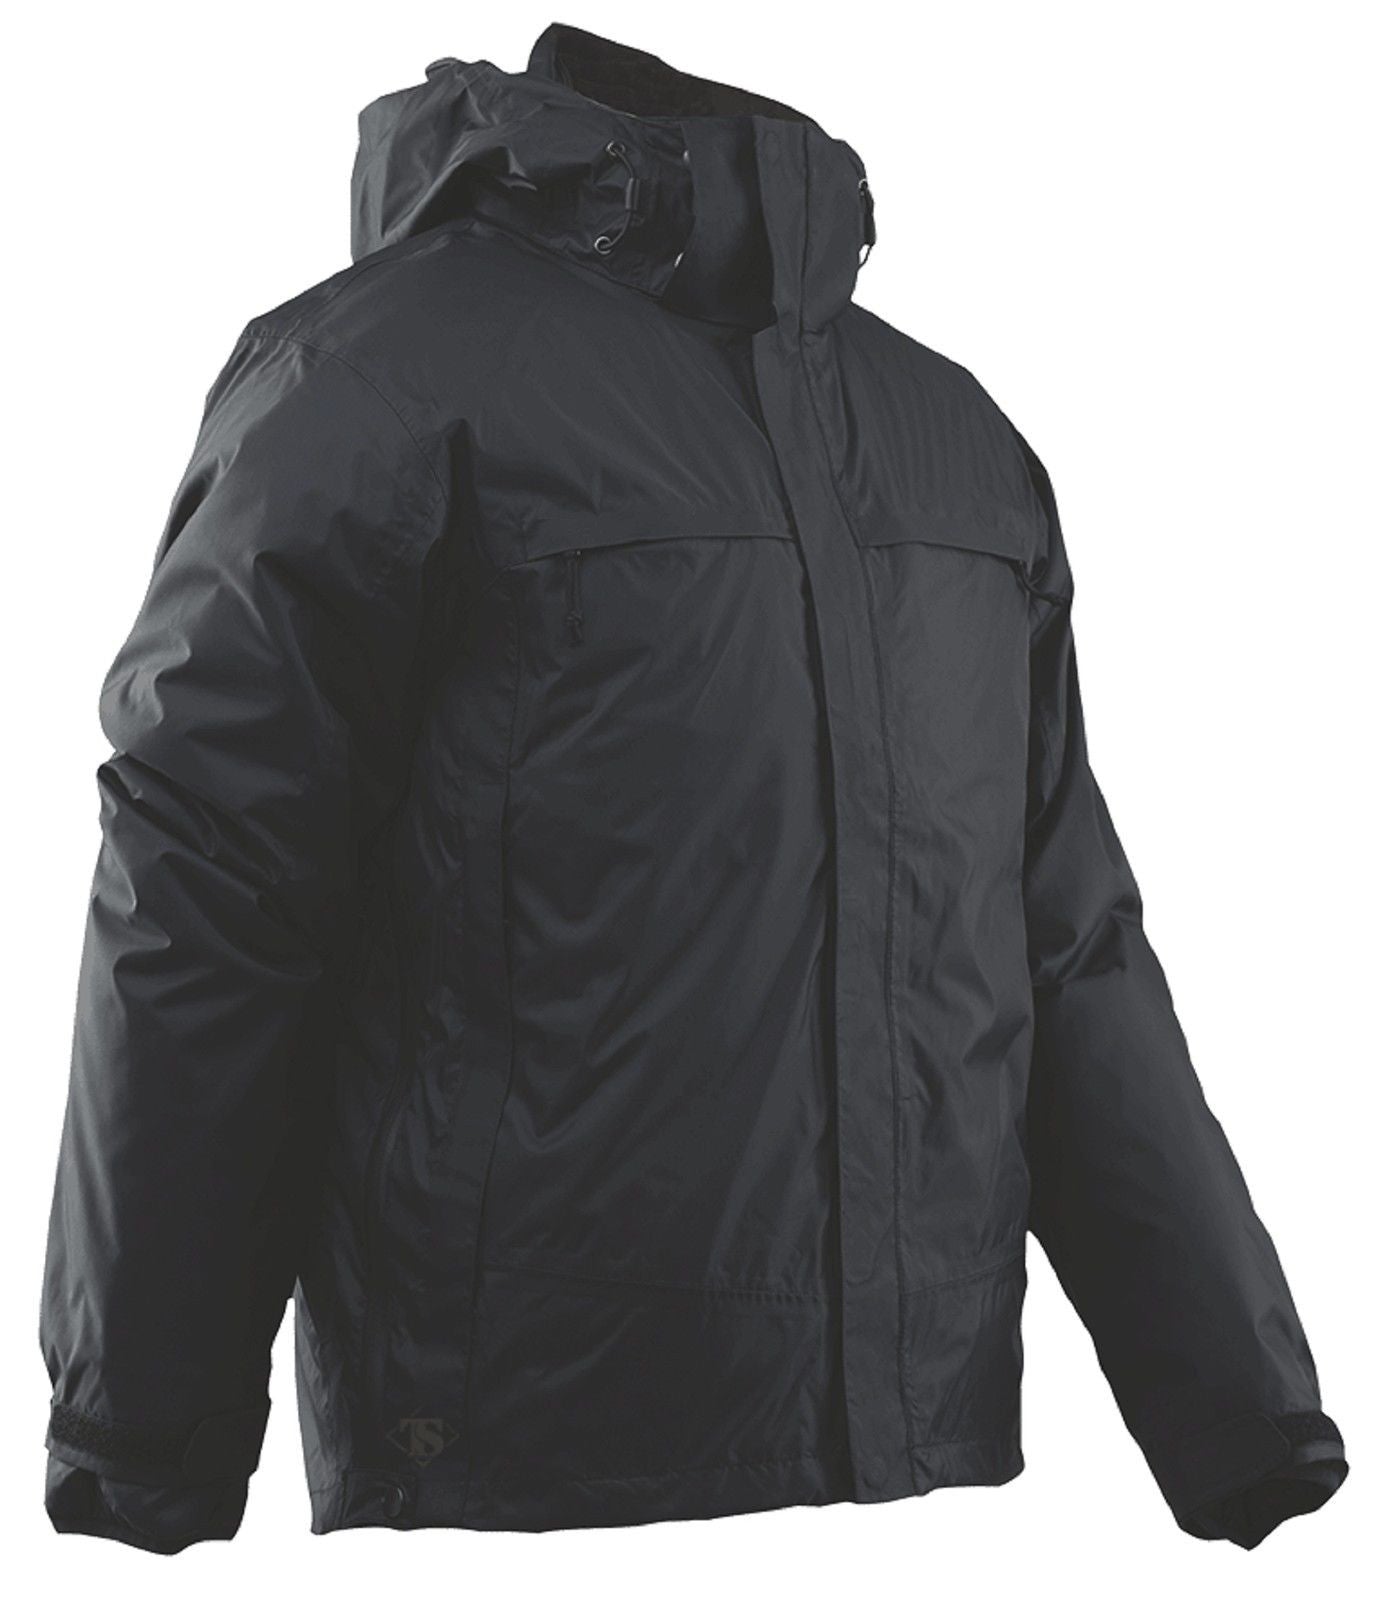 Tru-Spec 3-In-1 Waterproof Jacket - Mens Black or Navy Blue Nylon Tactical Coat